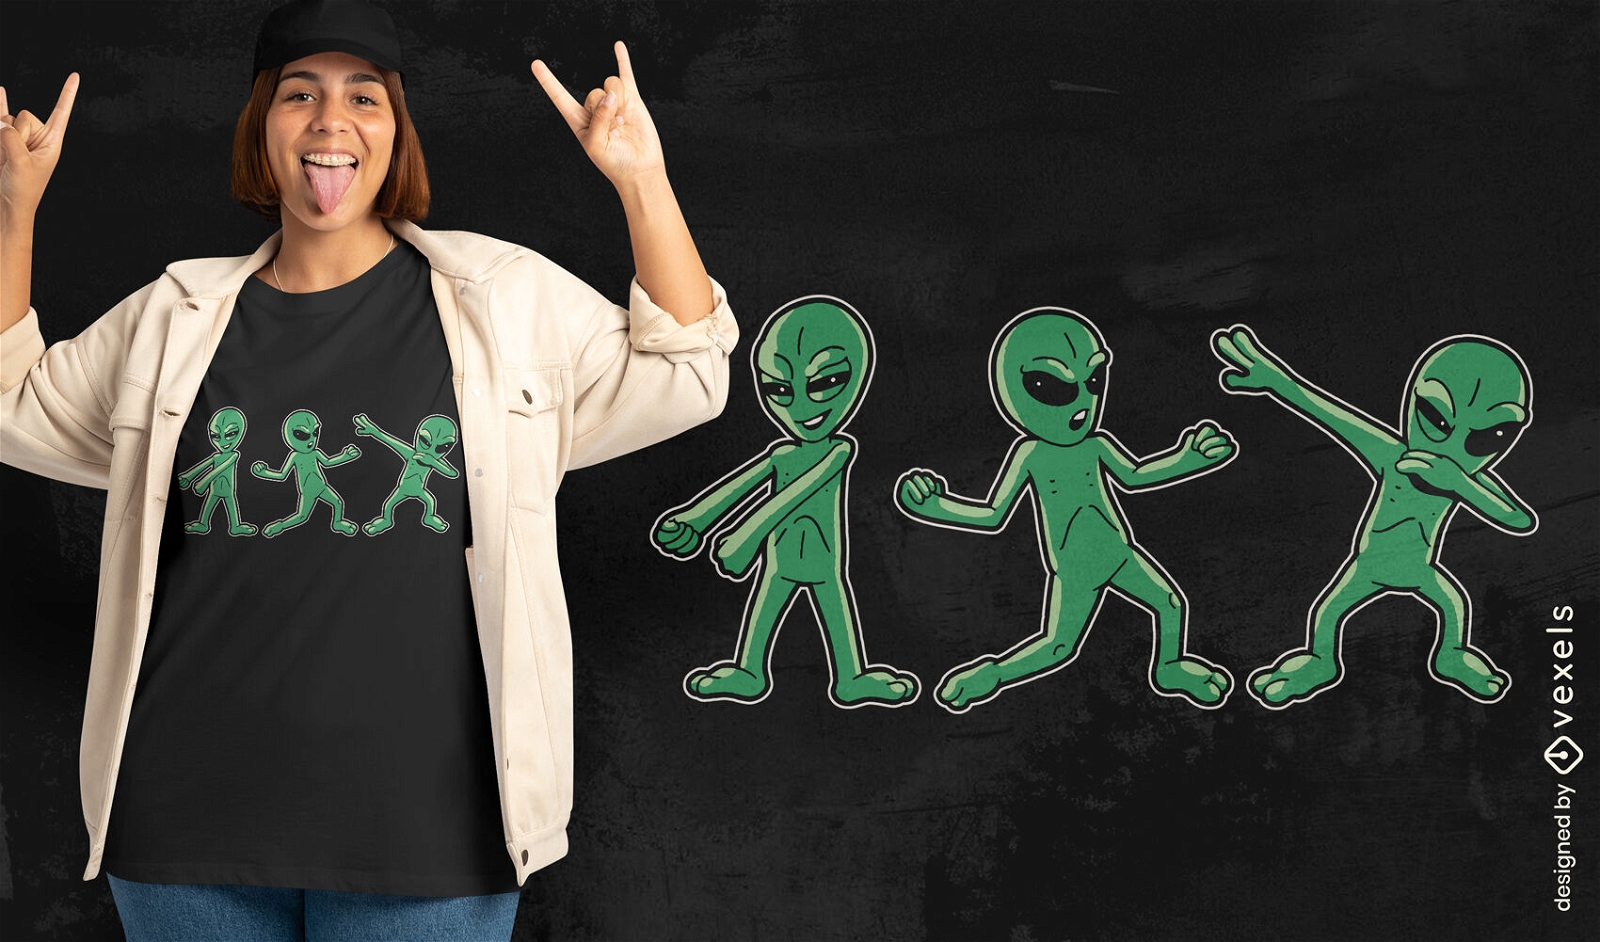 Aliens dancing cartoon t-shirt design